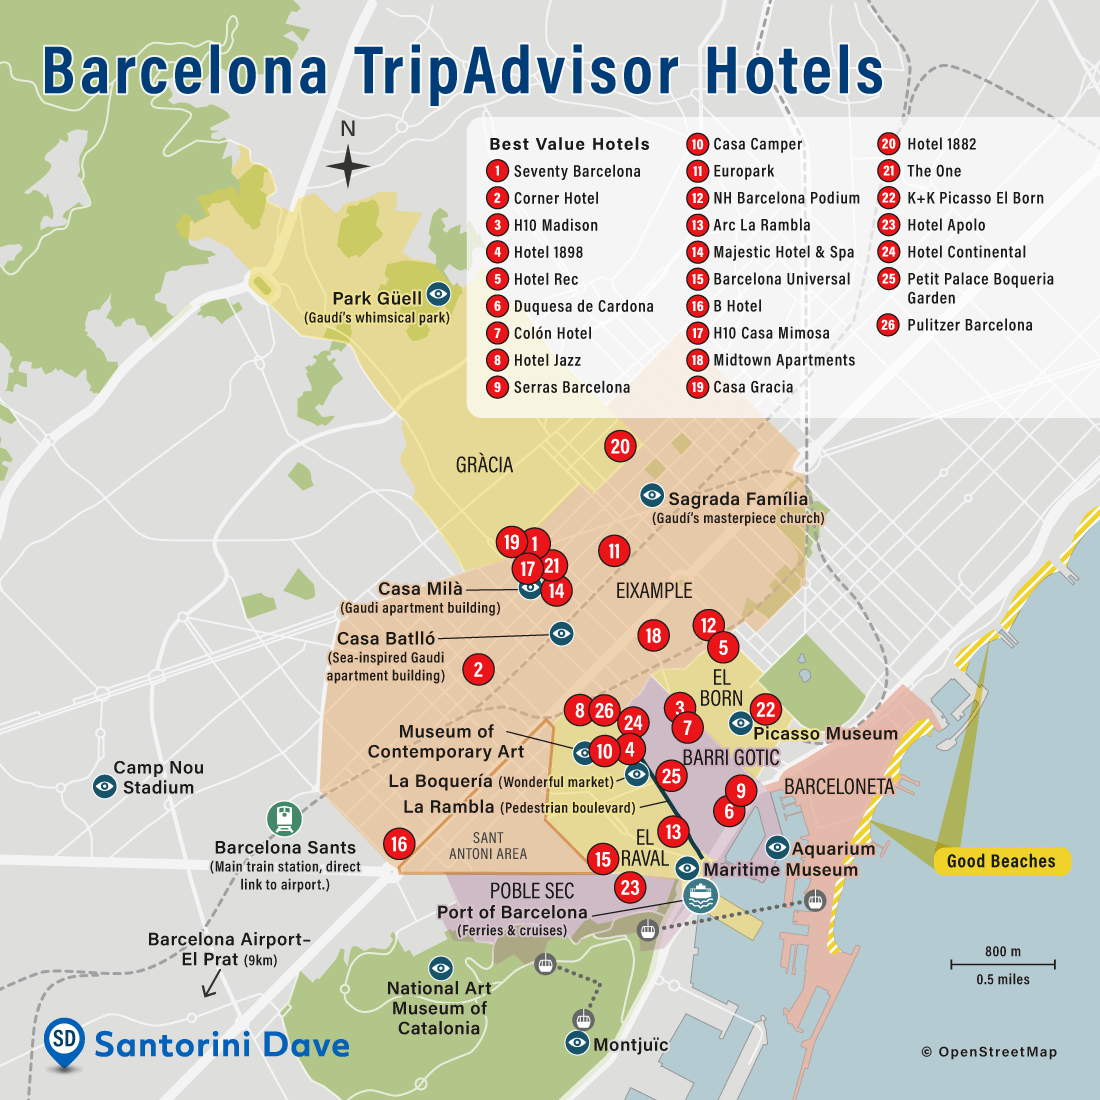 TripAdvisor Hotels in Barcelona, Spain.